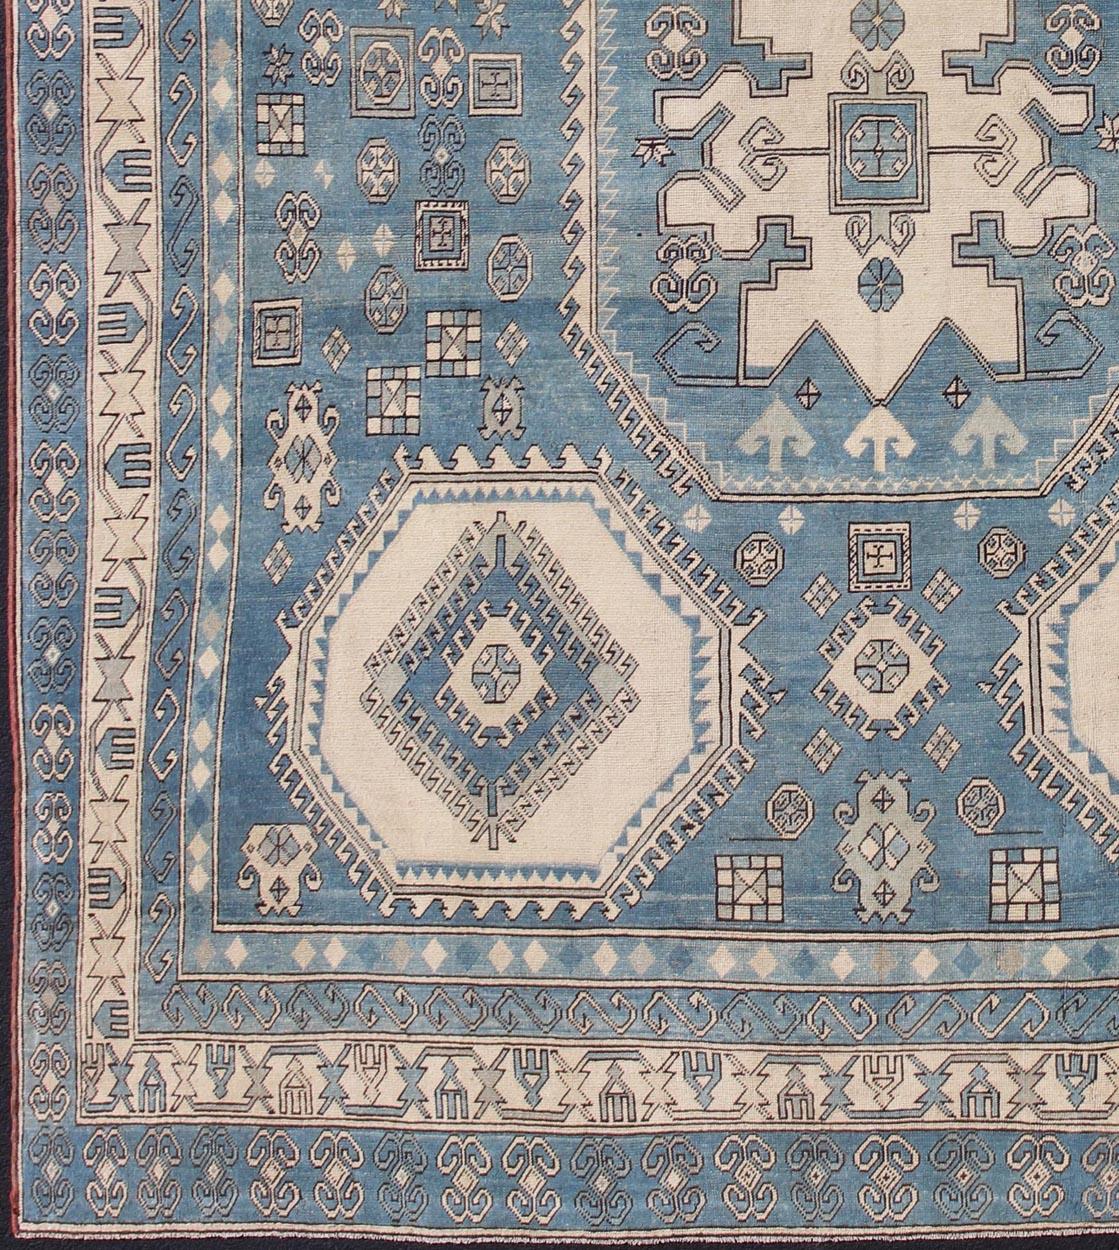 Oushak vintage rug from Turkey with Geometric hooked medallion in blue and cream tones. Keivan Woven Arts / rug EN-165873, country of origin / type: Turkey / Oushak, circa 1930.
Measures: 13' x 15'.
This striking vintage Turkish Oushak rug bears a